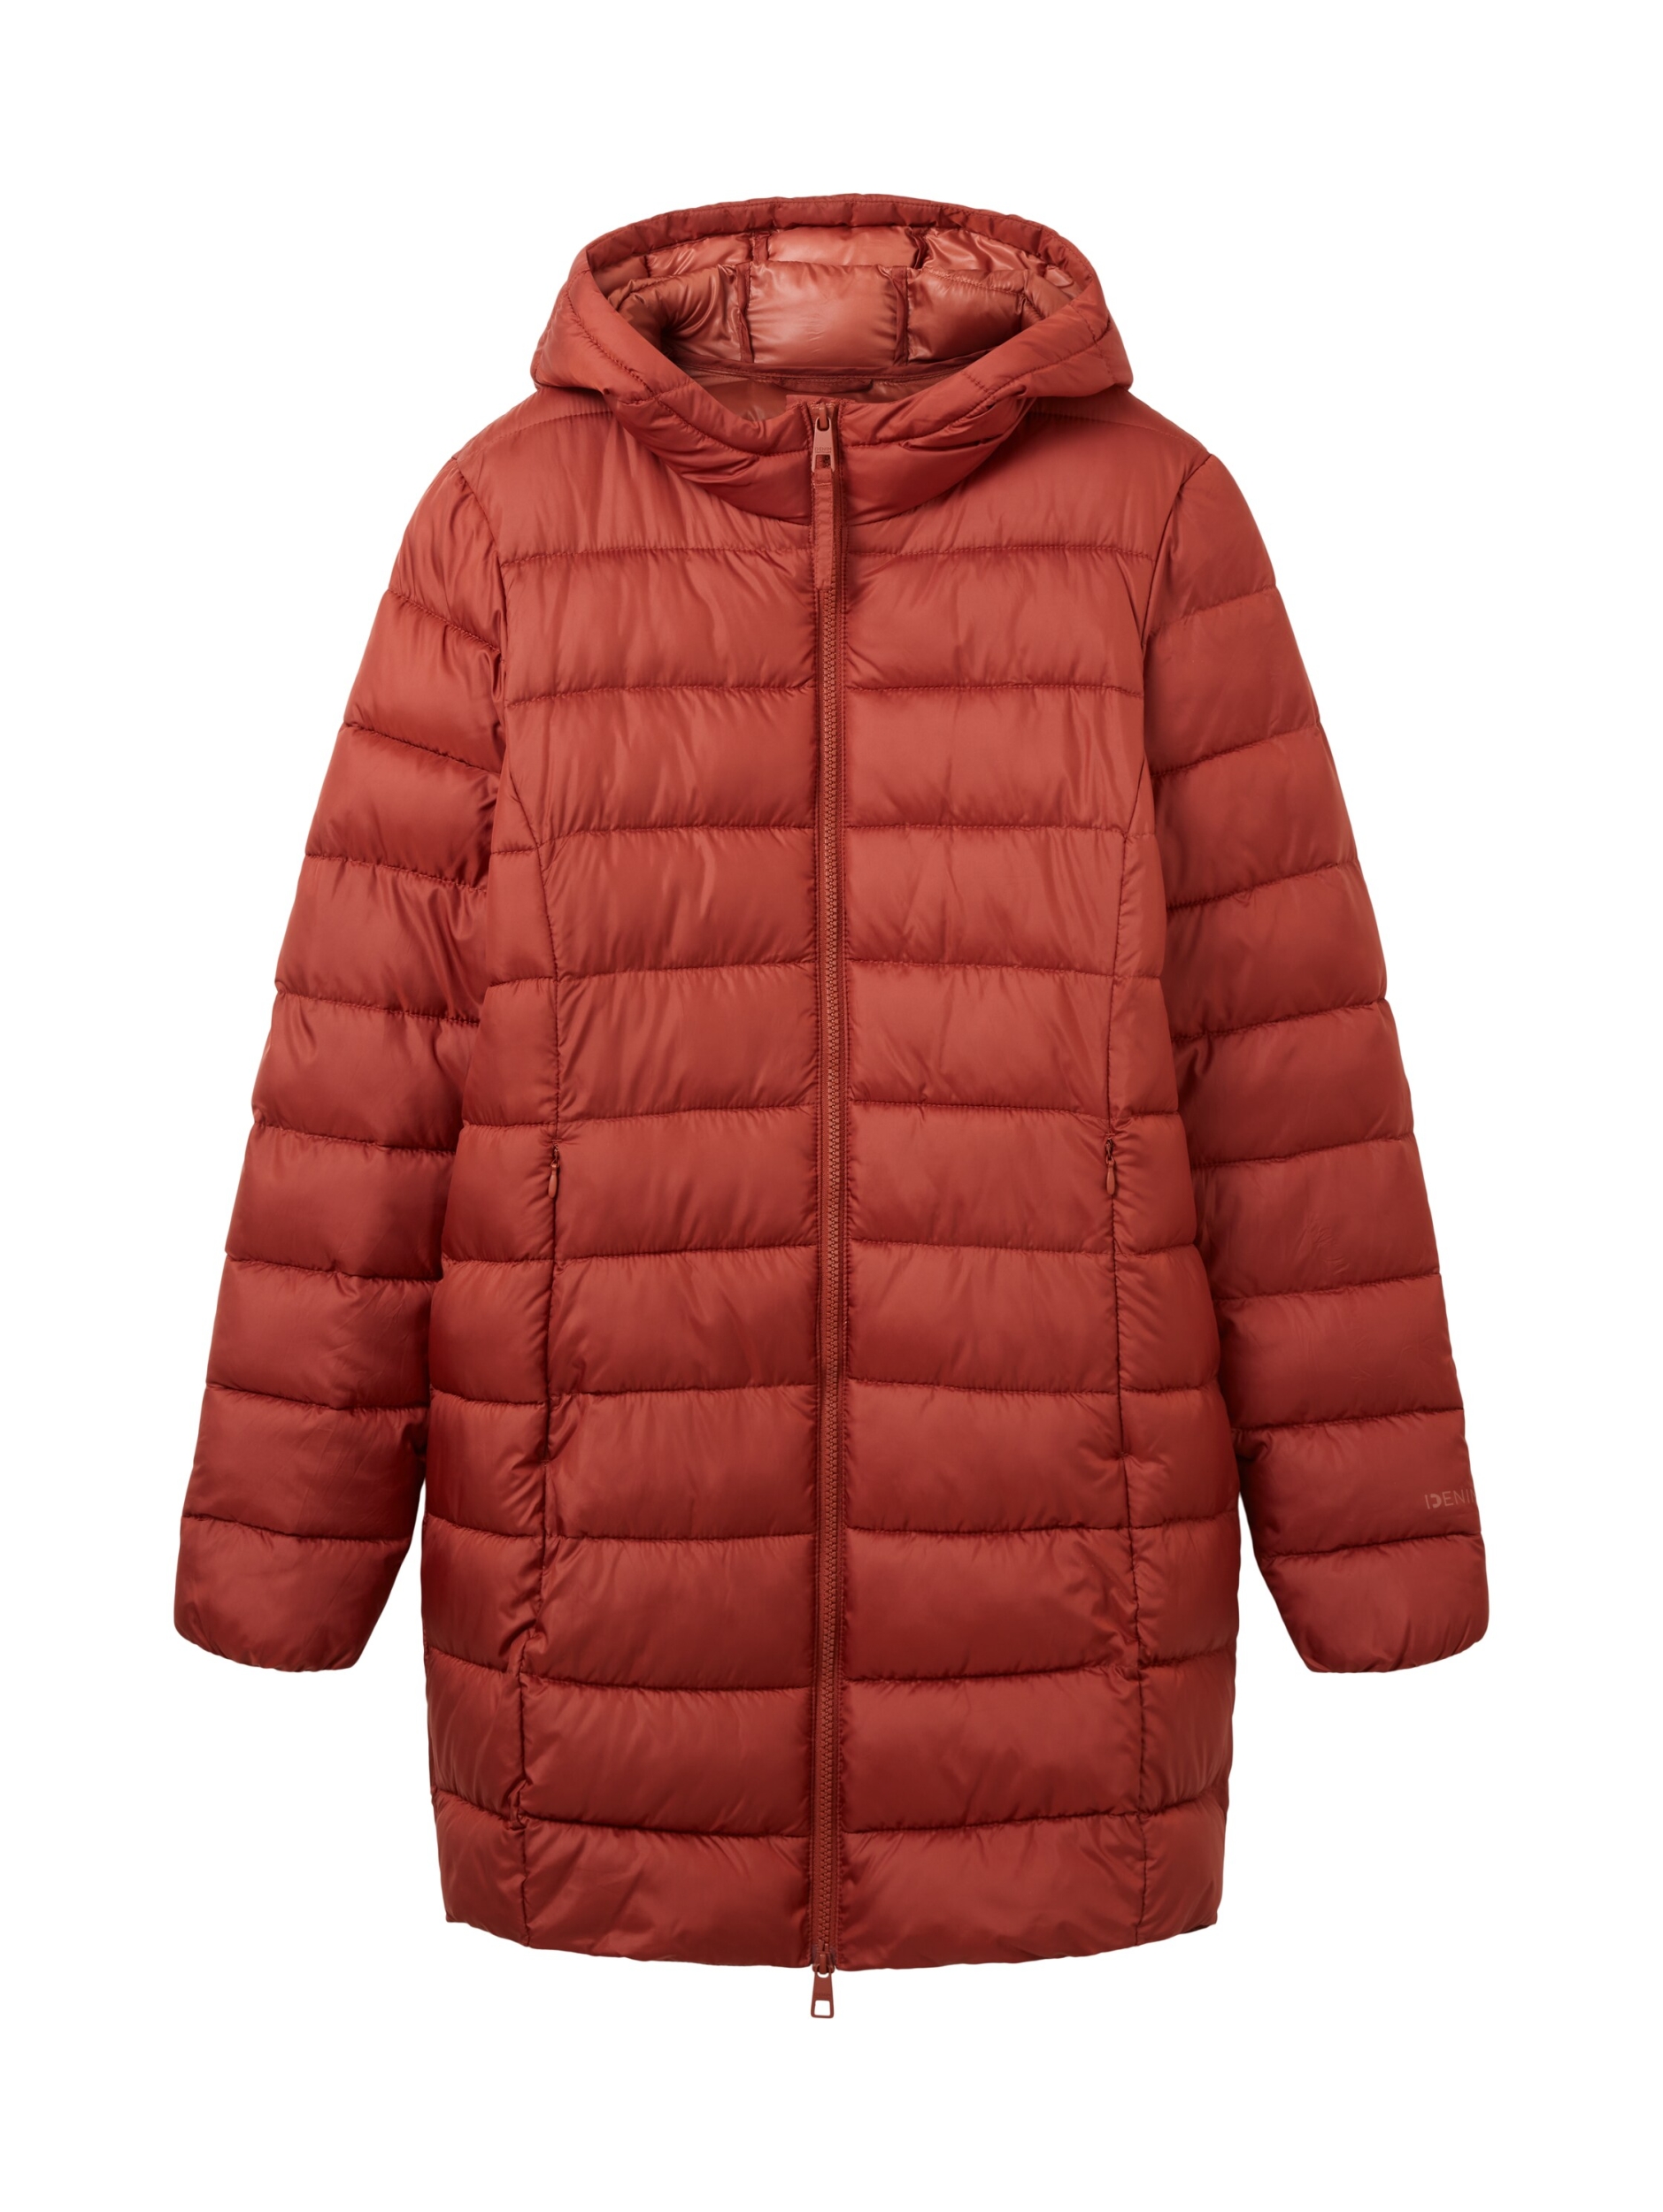 lightweight puffer coat | L dark | brandy 1038551-13002_dark-L brown 